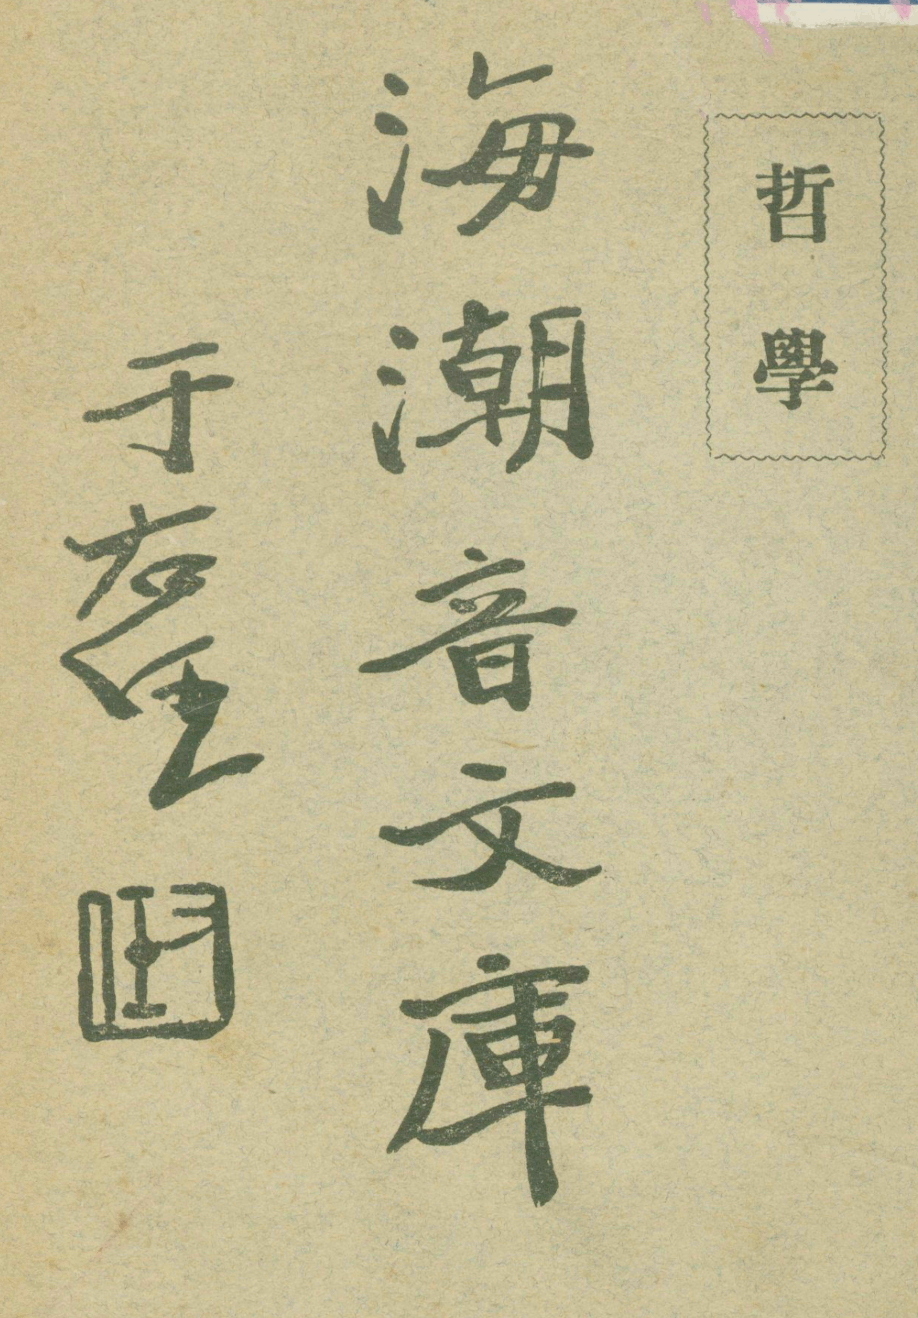 File:Zhexue 1930.png